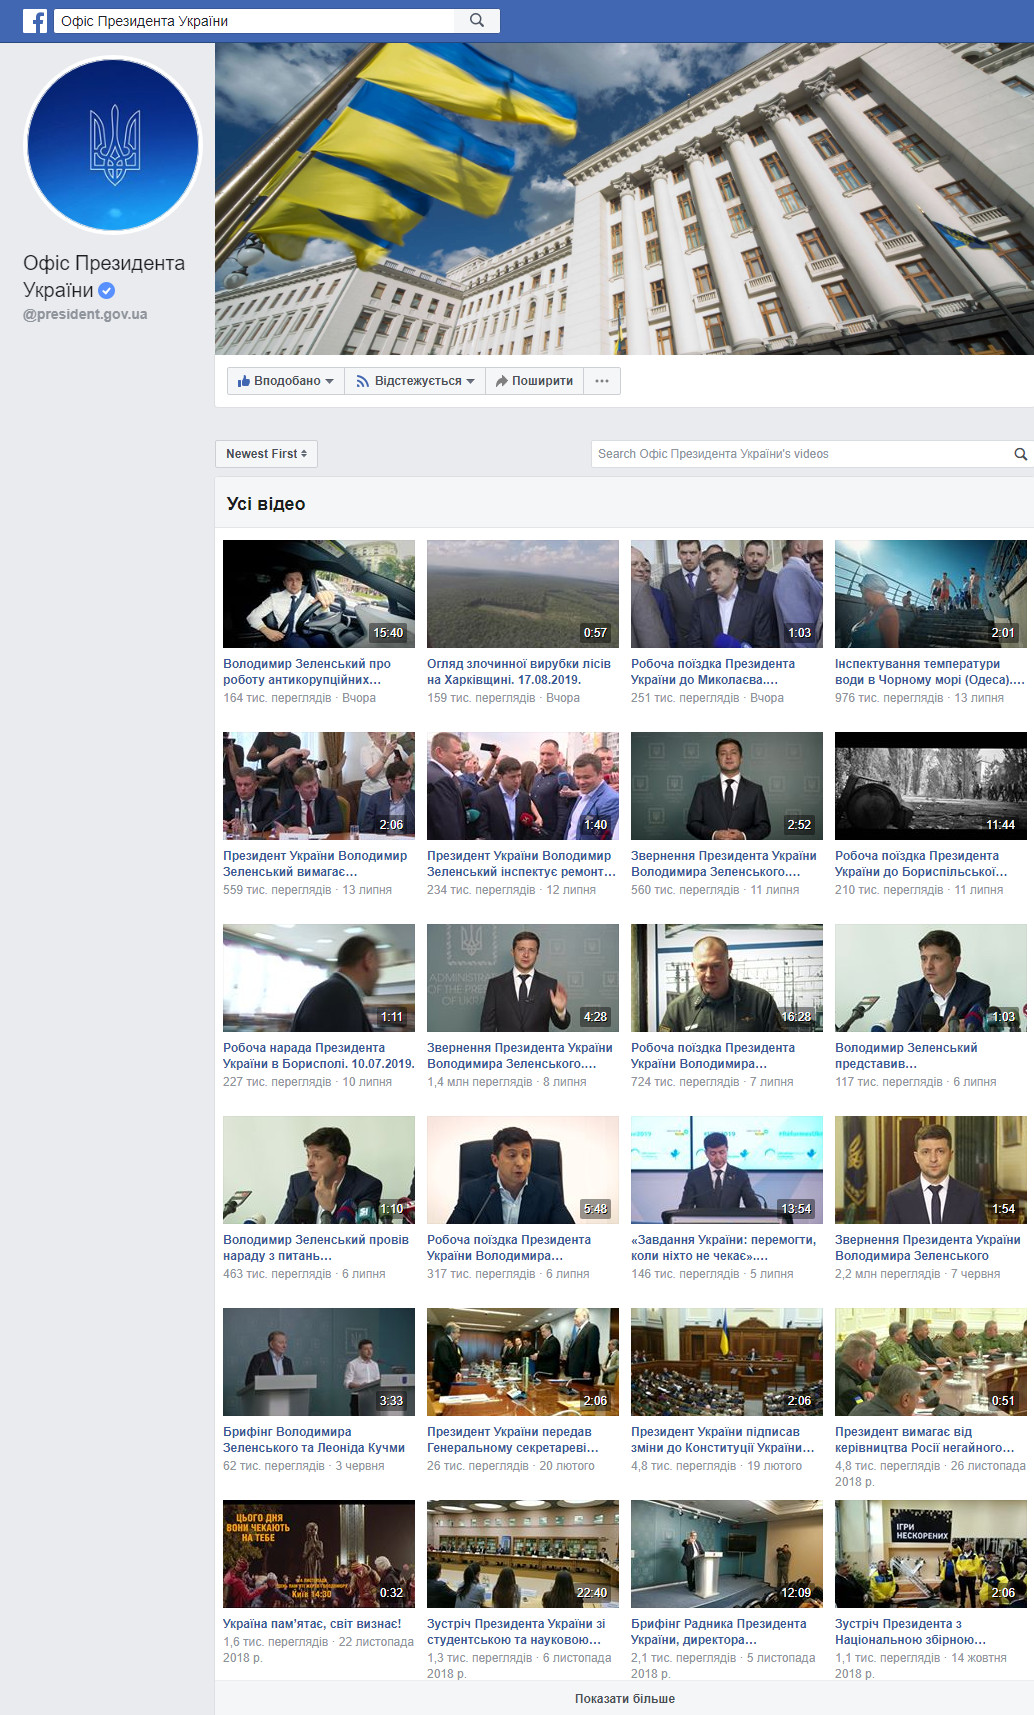 https://www.facebook.com/pg/president.gov.ua/videos/?ref=page_internal